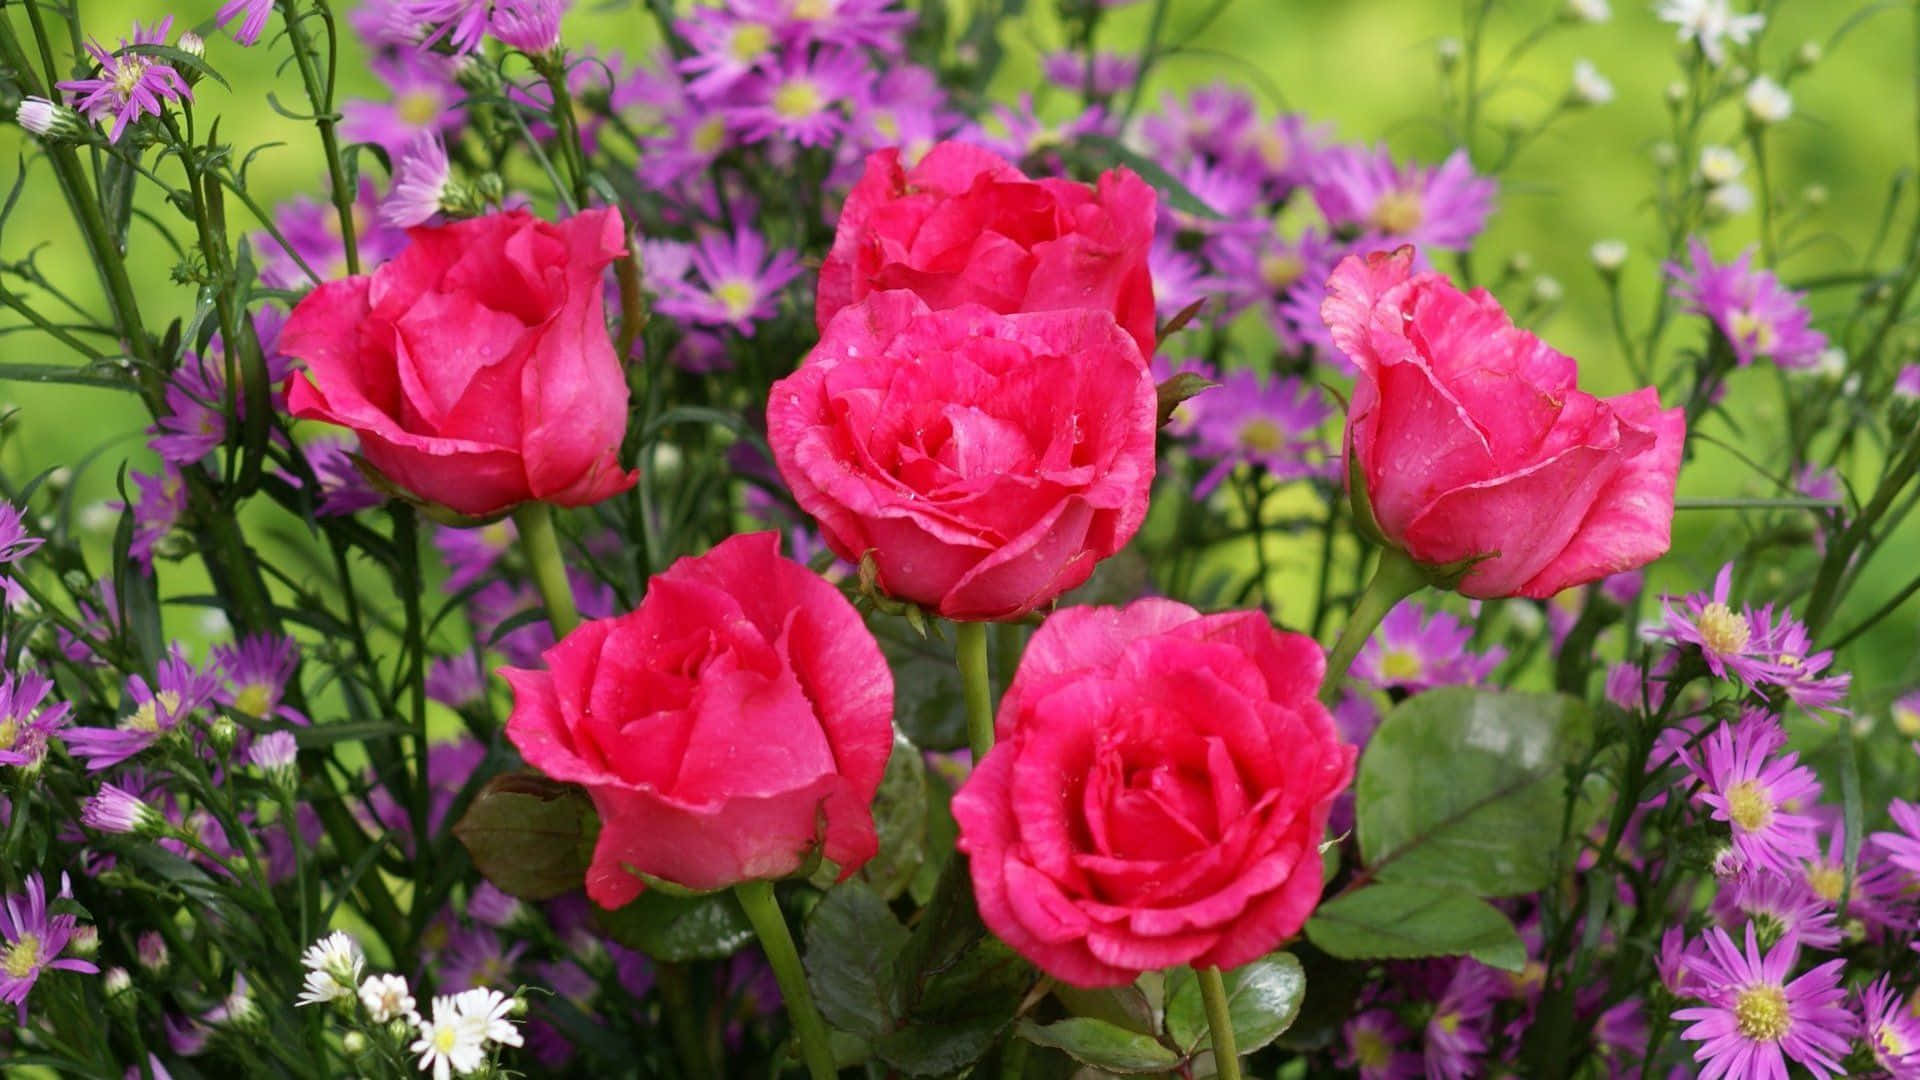 Beautiful Variety of Garden Roses in Full Bloom